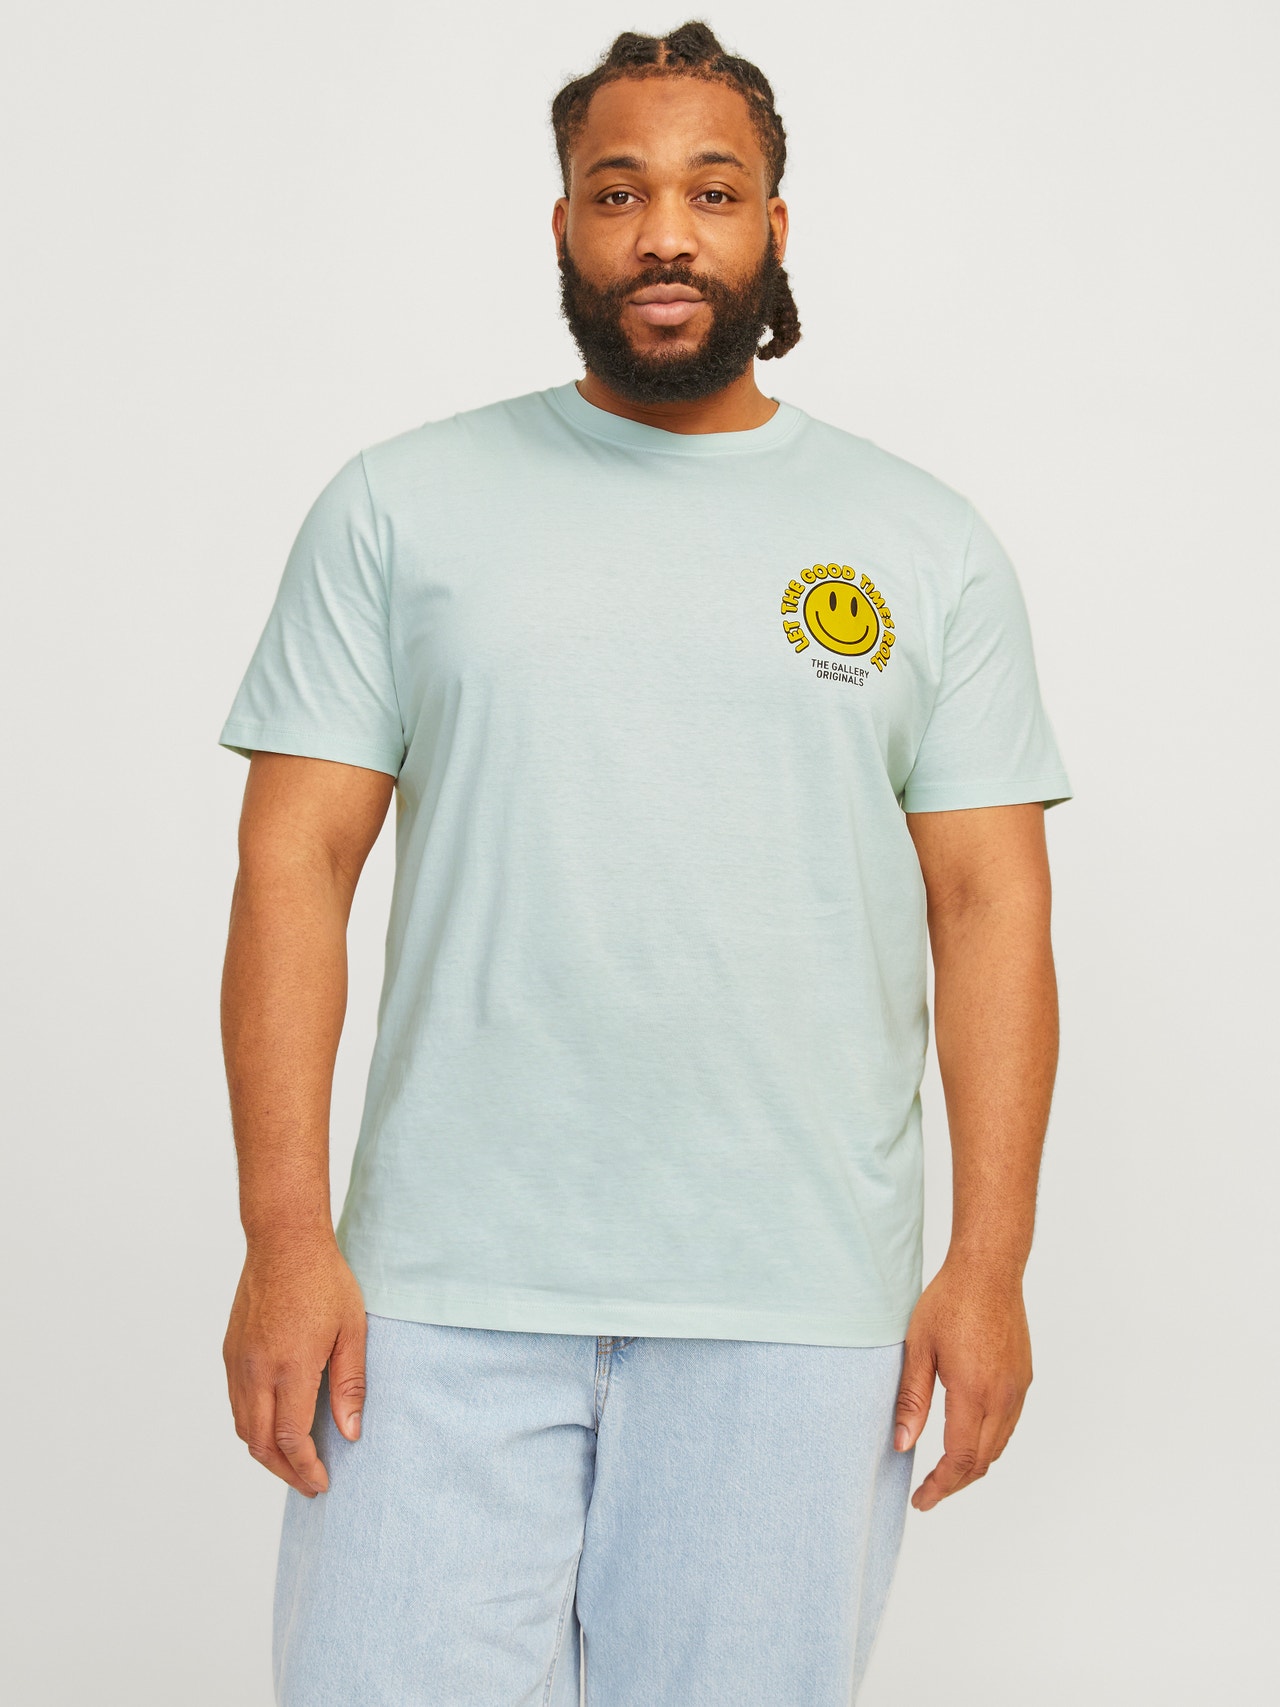 Jack & Jones Plus Size Gedruckt T-shirt -Skylight - 12261568